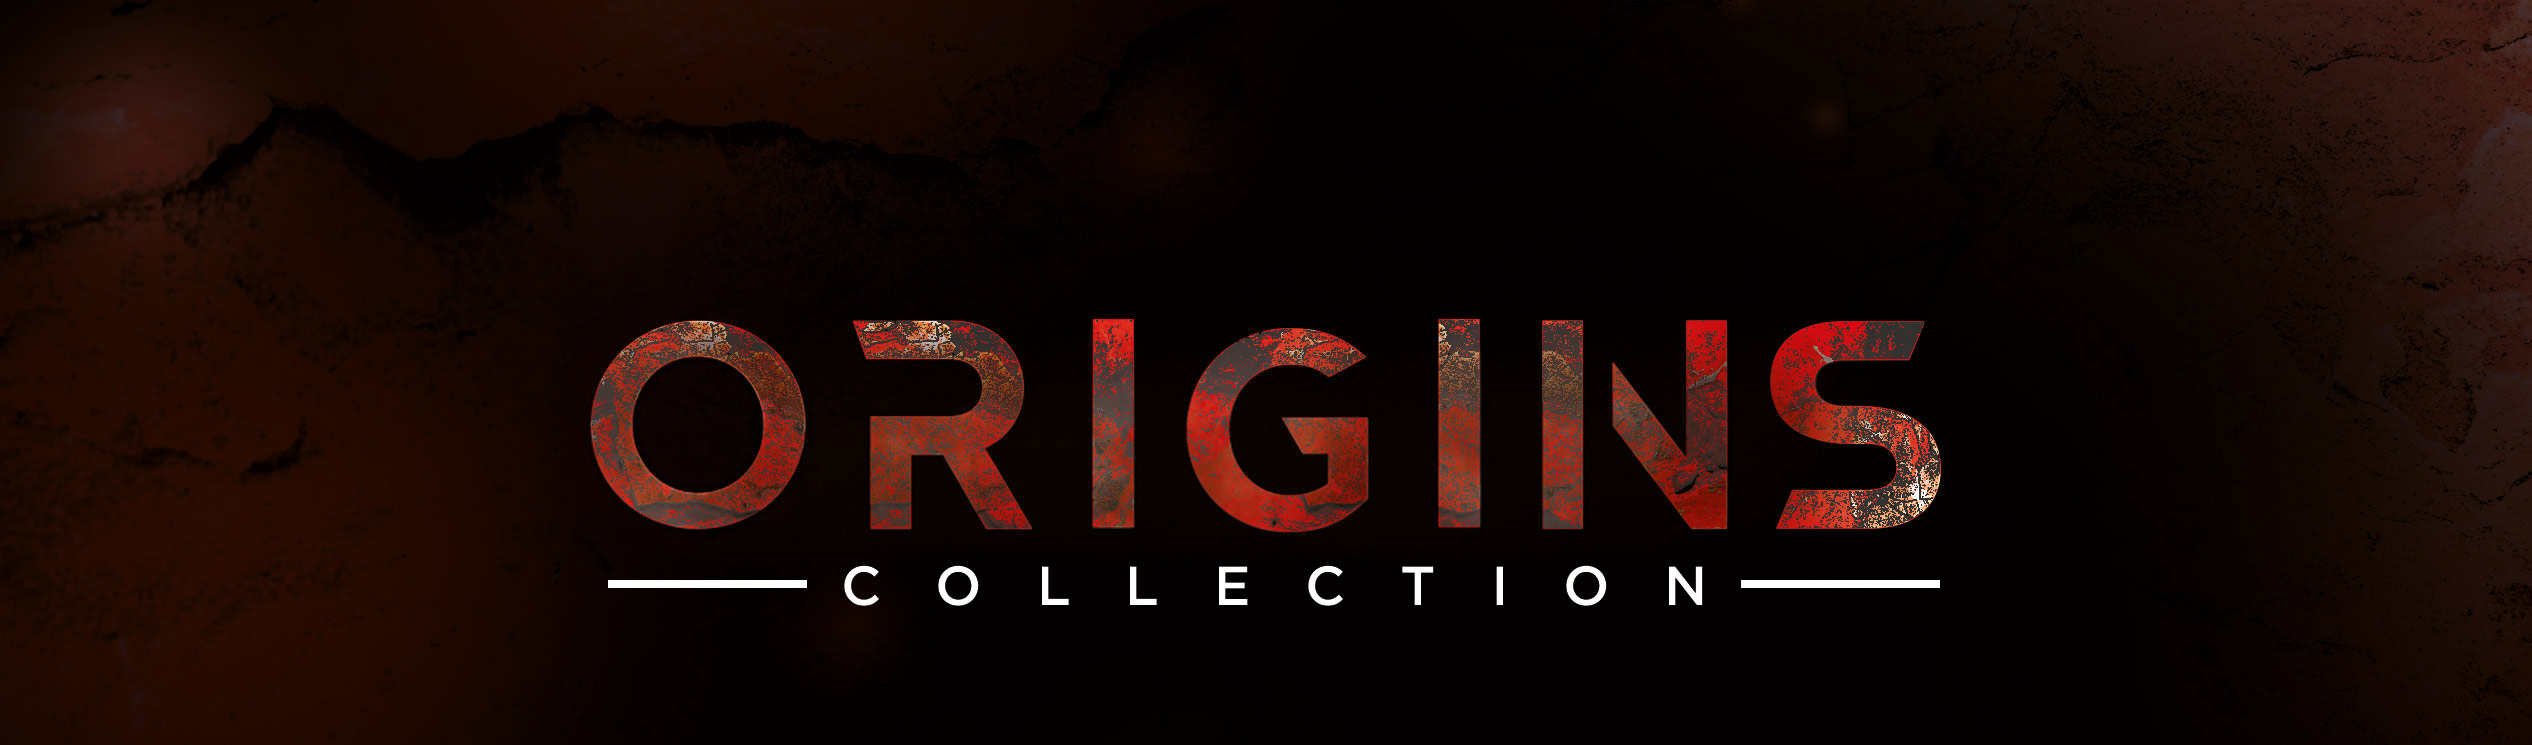 Origins Collection Banner